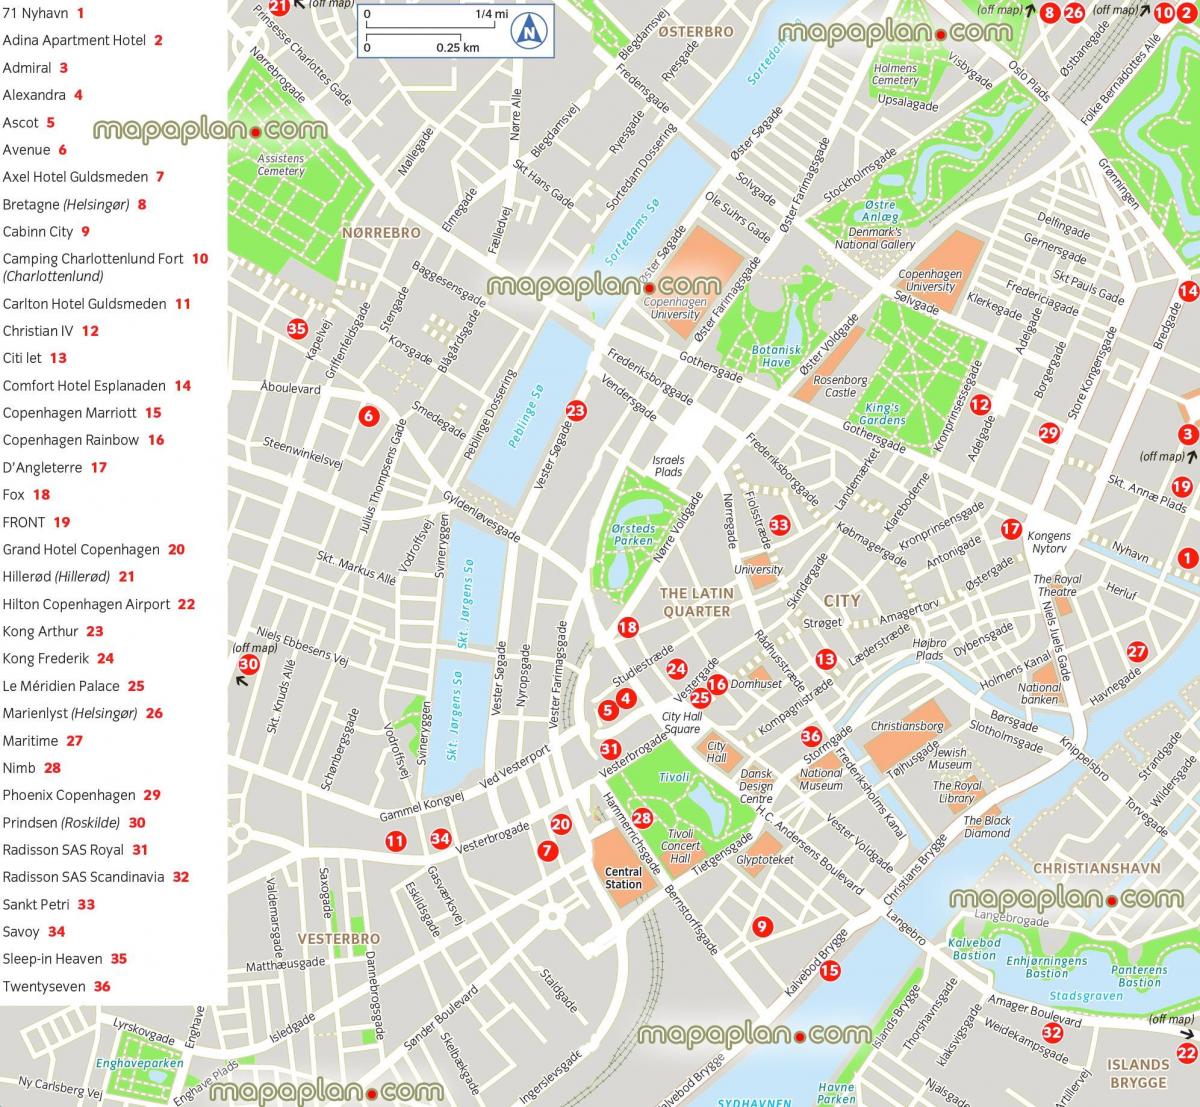 Copenhagen sights map